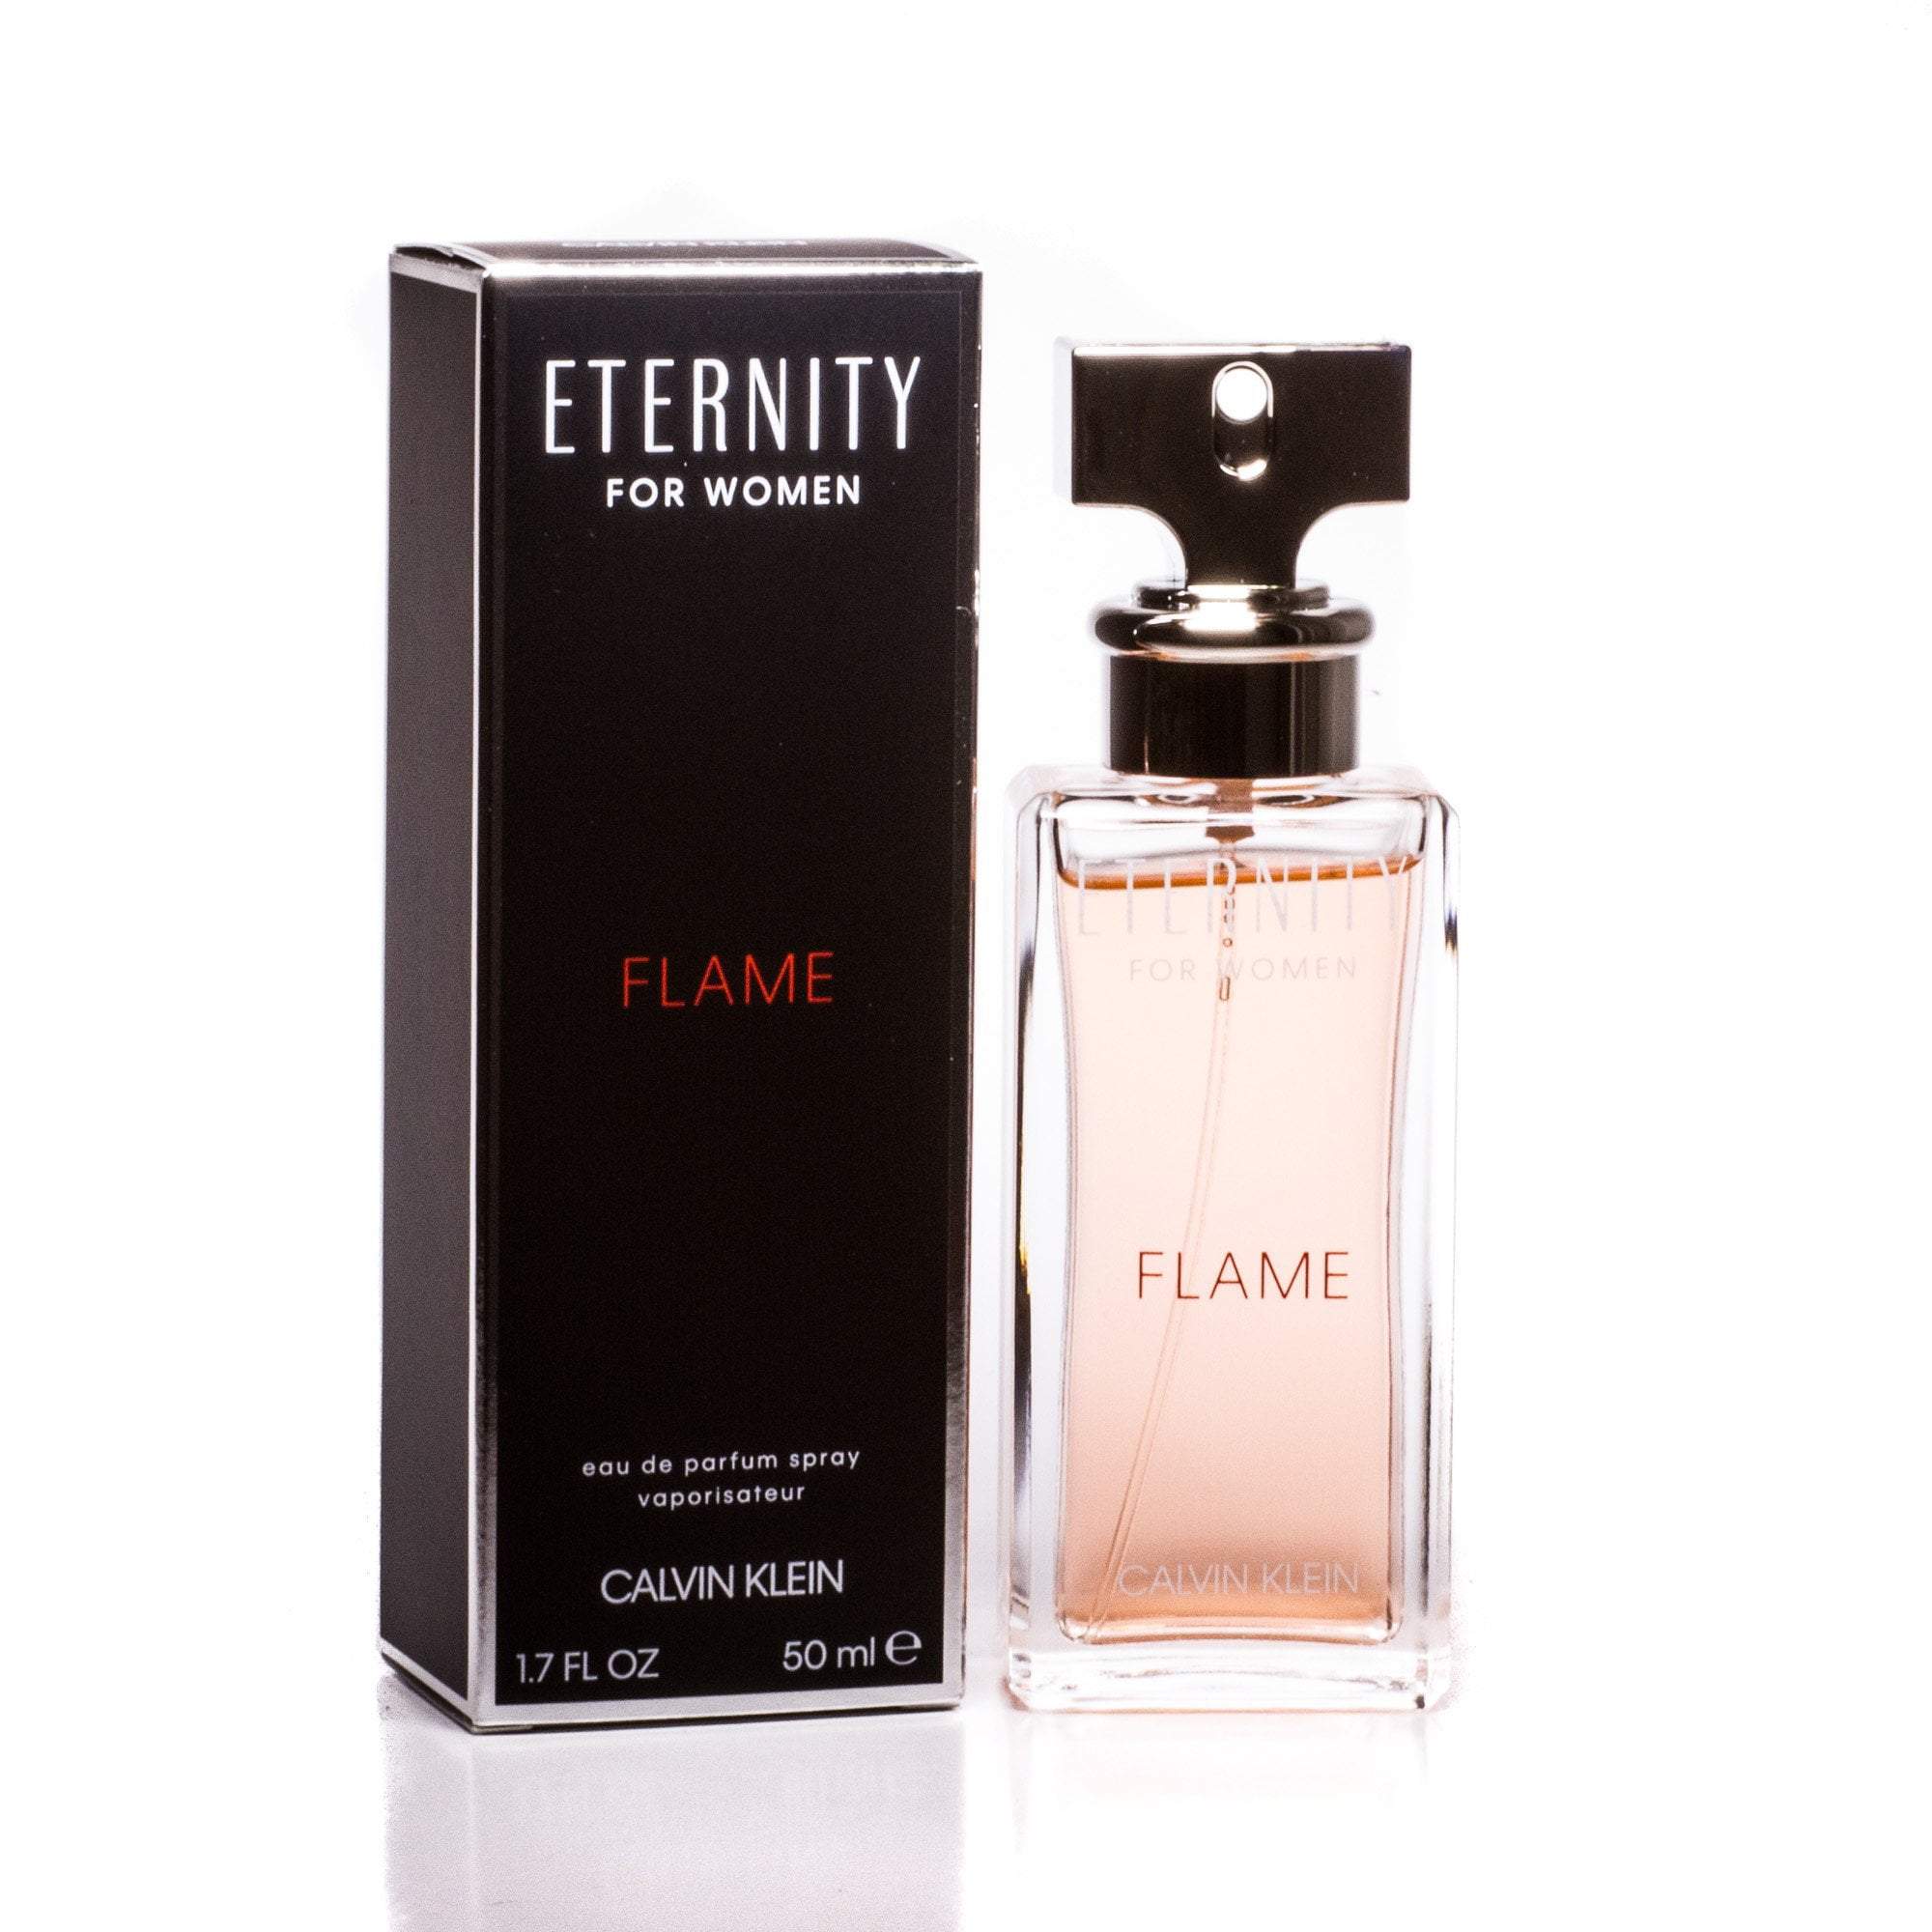 Eternity Flame Eau de Parfum Spray for Women by Calvin Klein Secondary image